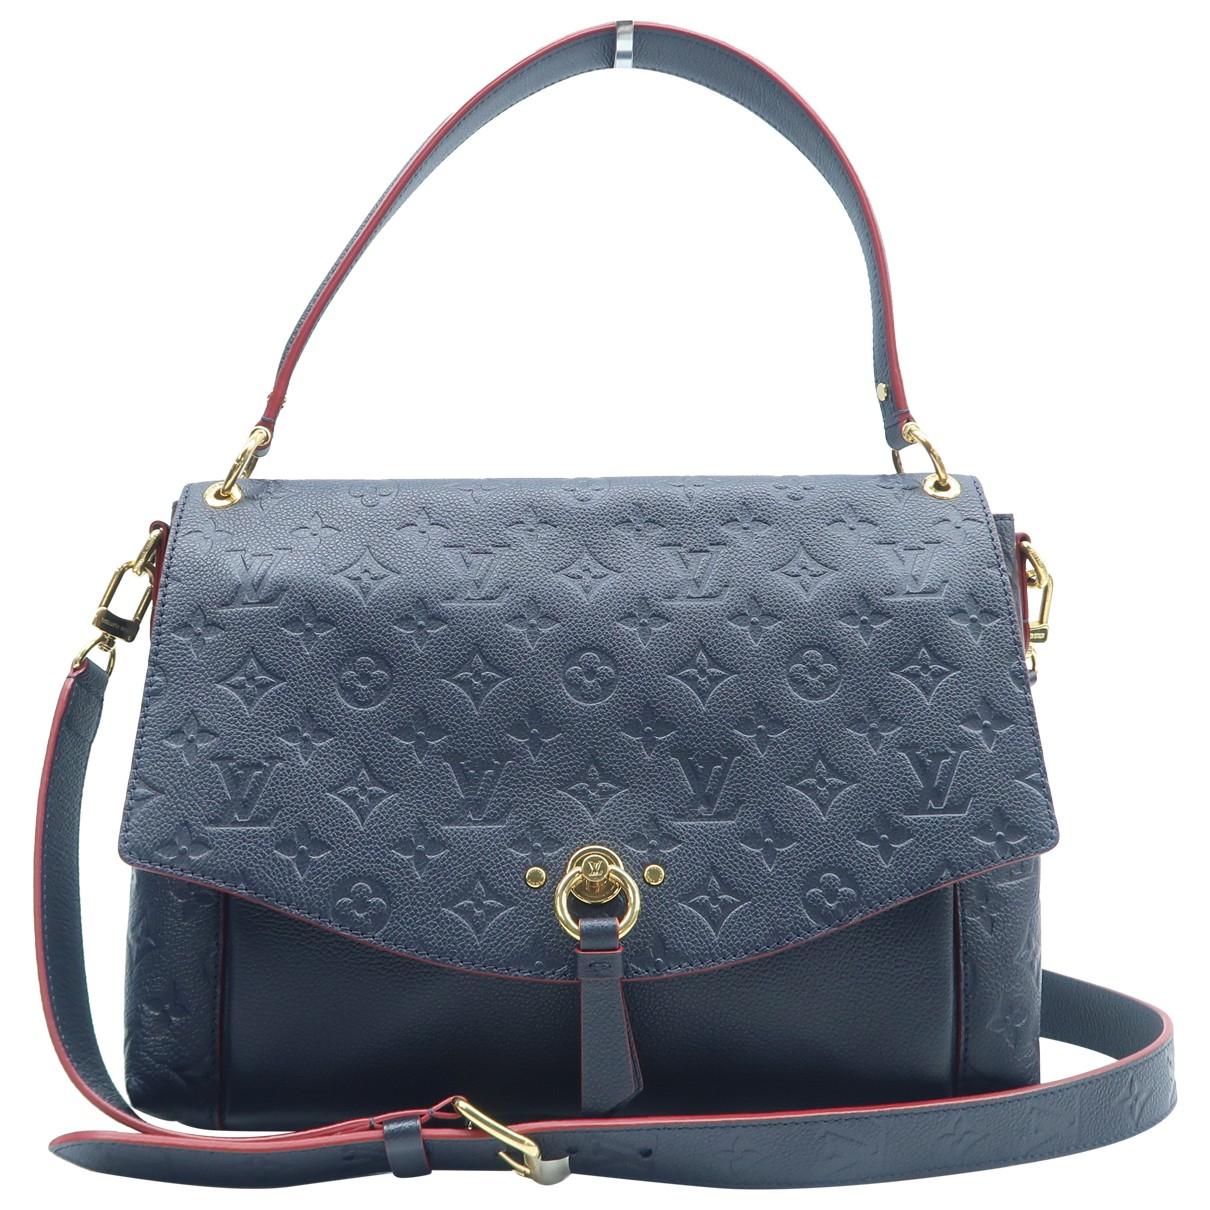 Blanche Louis Vuitton Handbags for Women - Vestiaire Collective